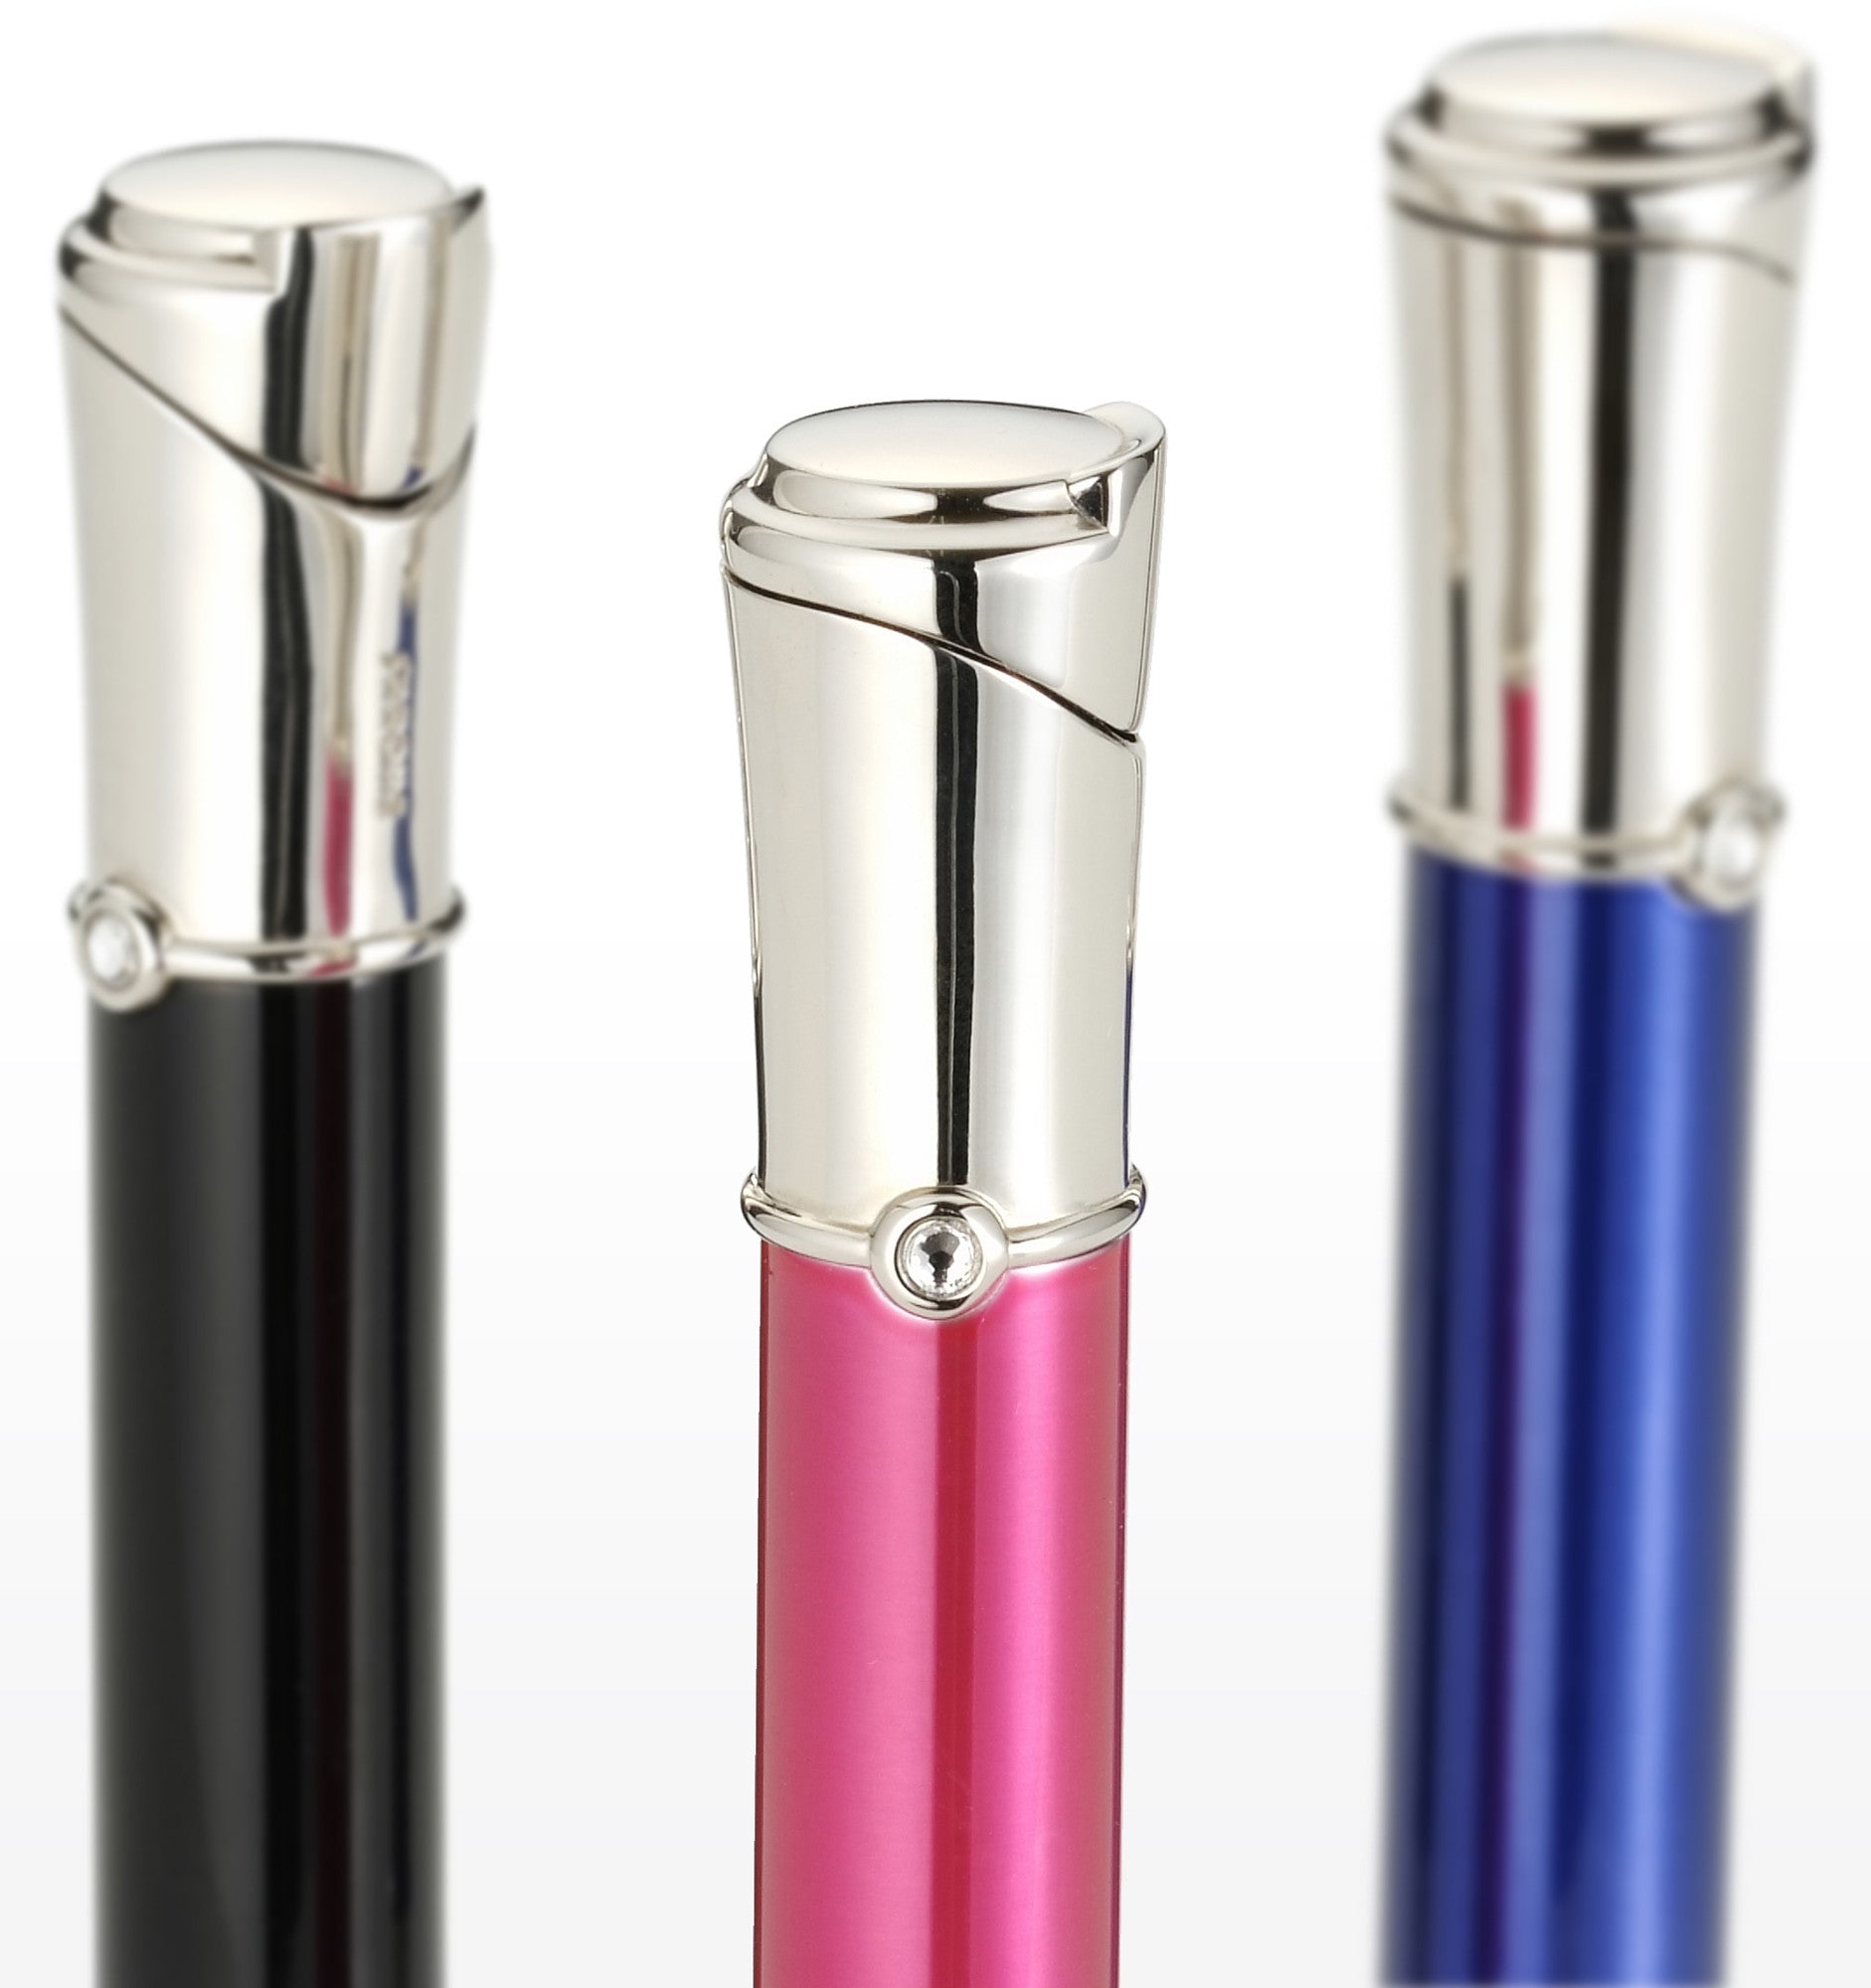 Sarome Piezo Electronic Lighter SK151-07 Pink/Silver